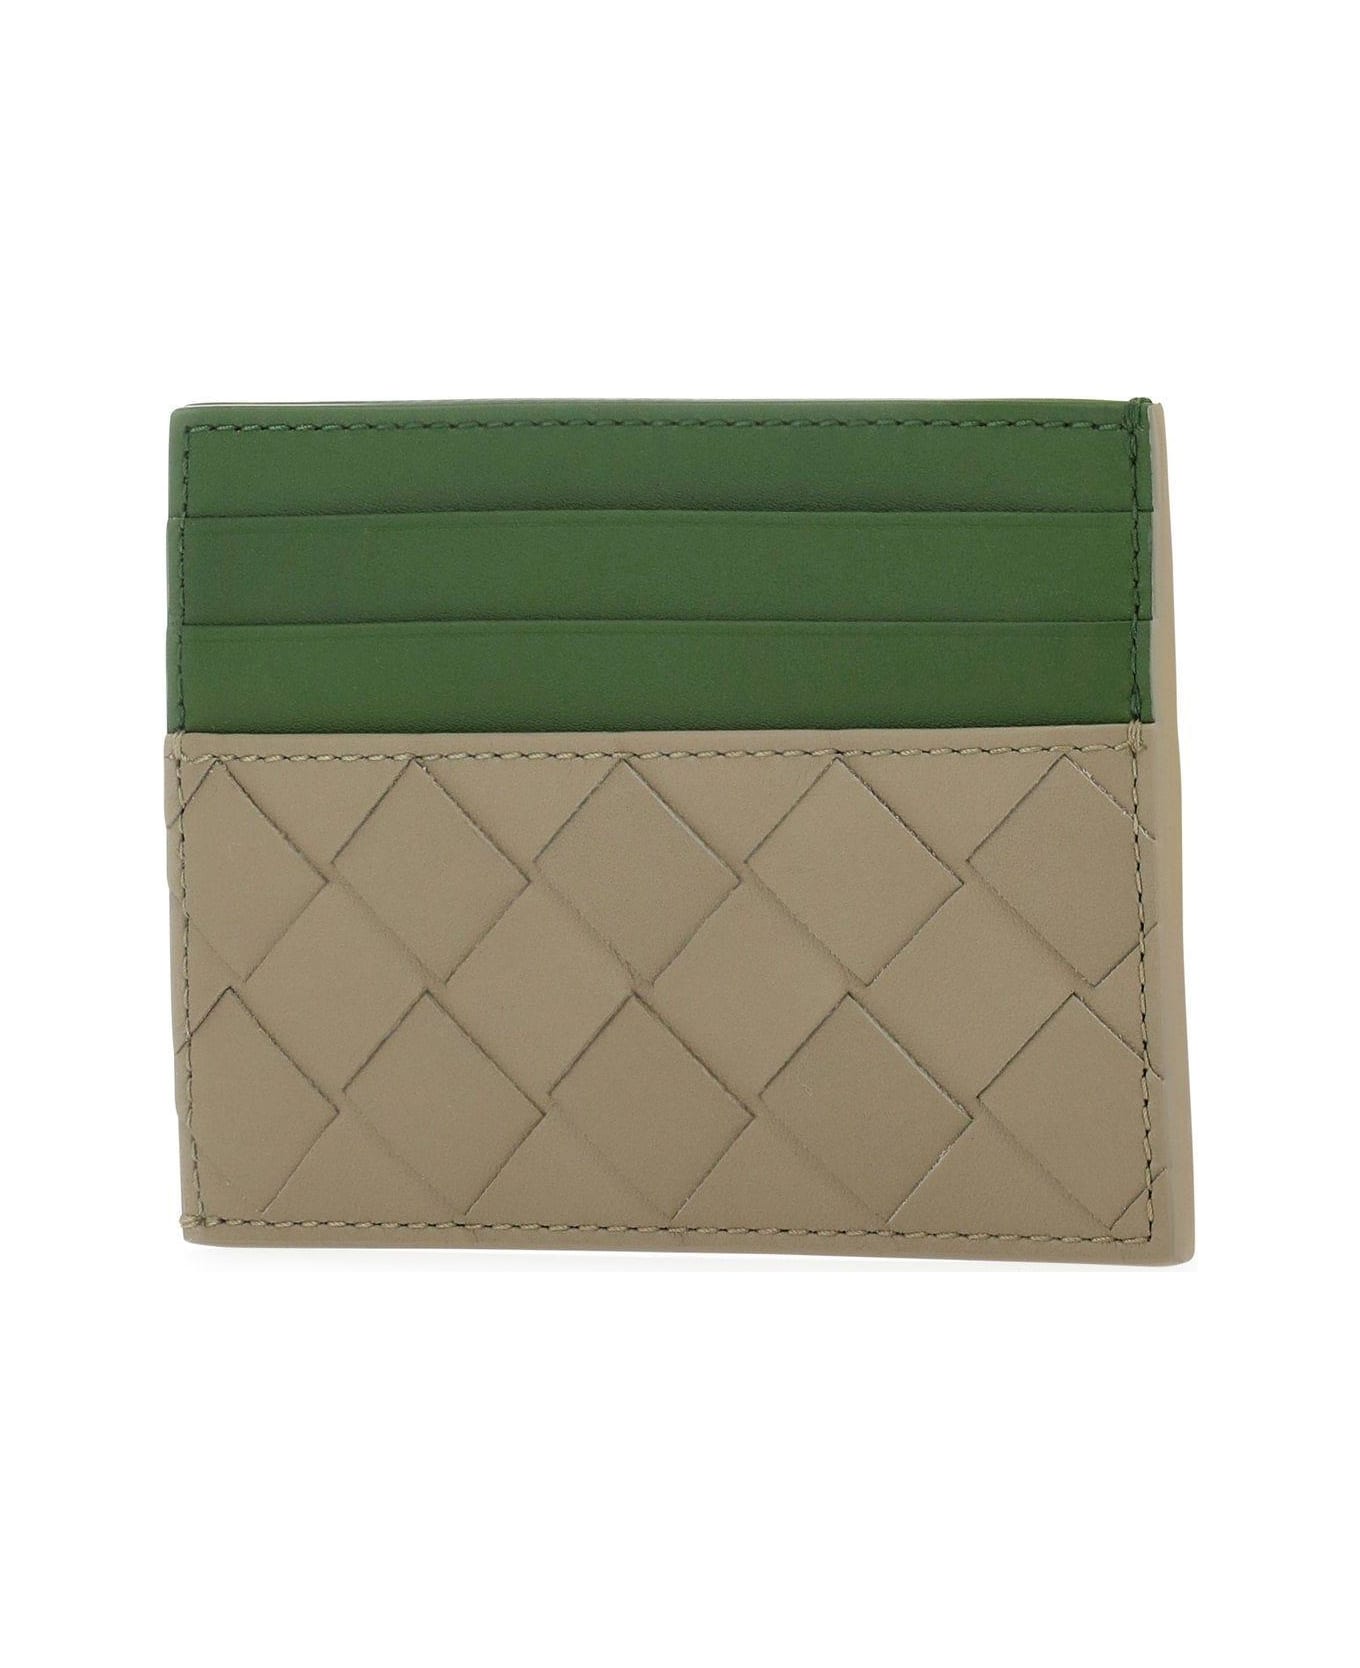 Bottega Veneta Two-tone Leather Card Holder